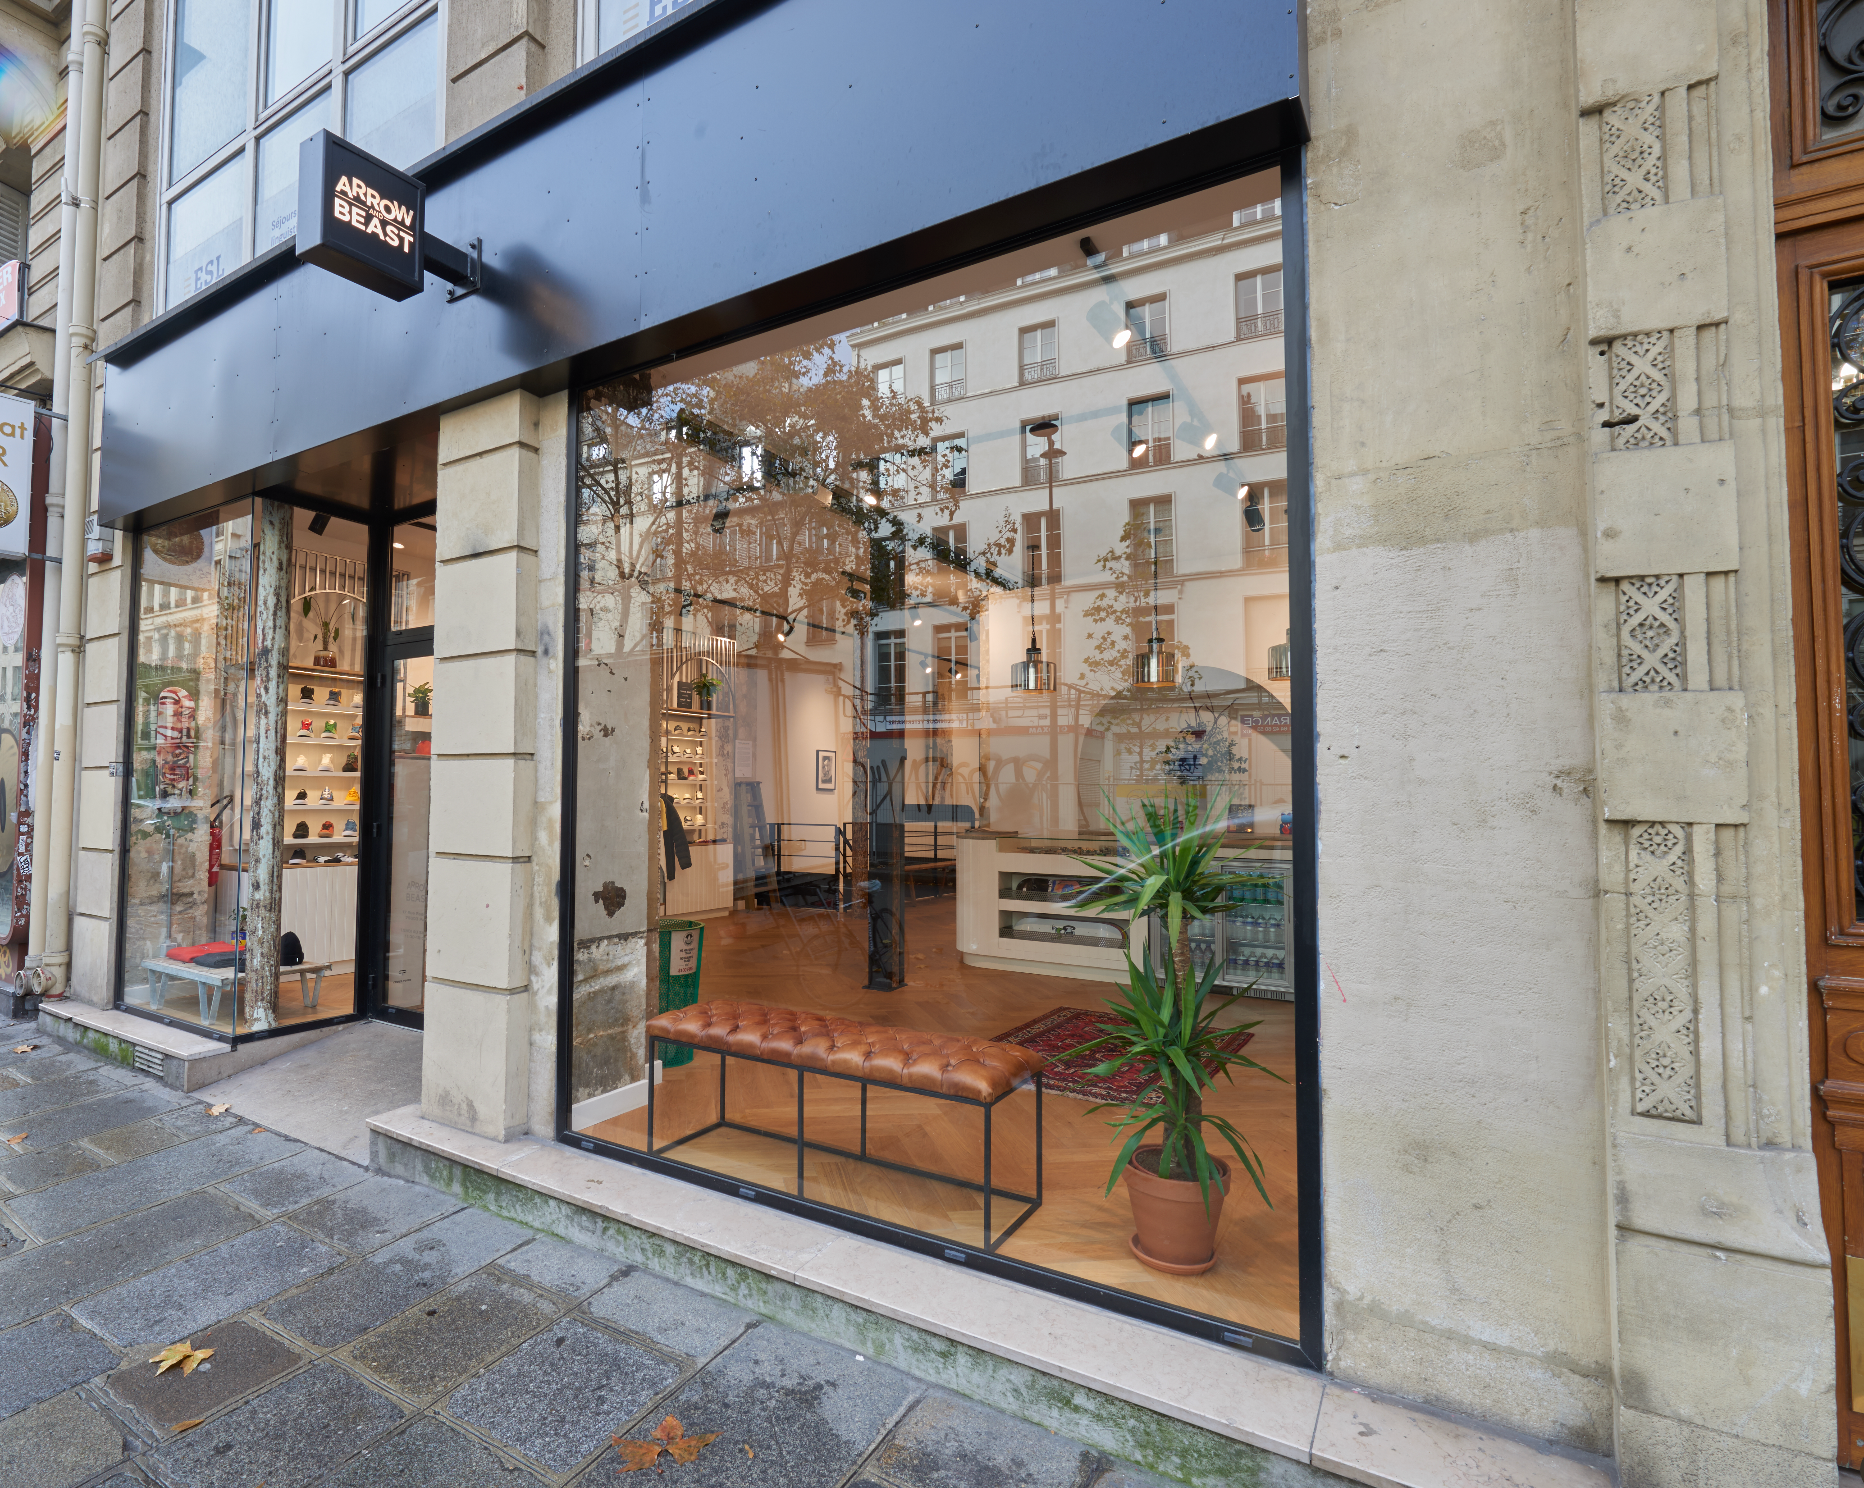 The Paris Arrow & Beast Store